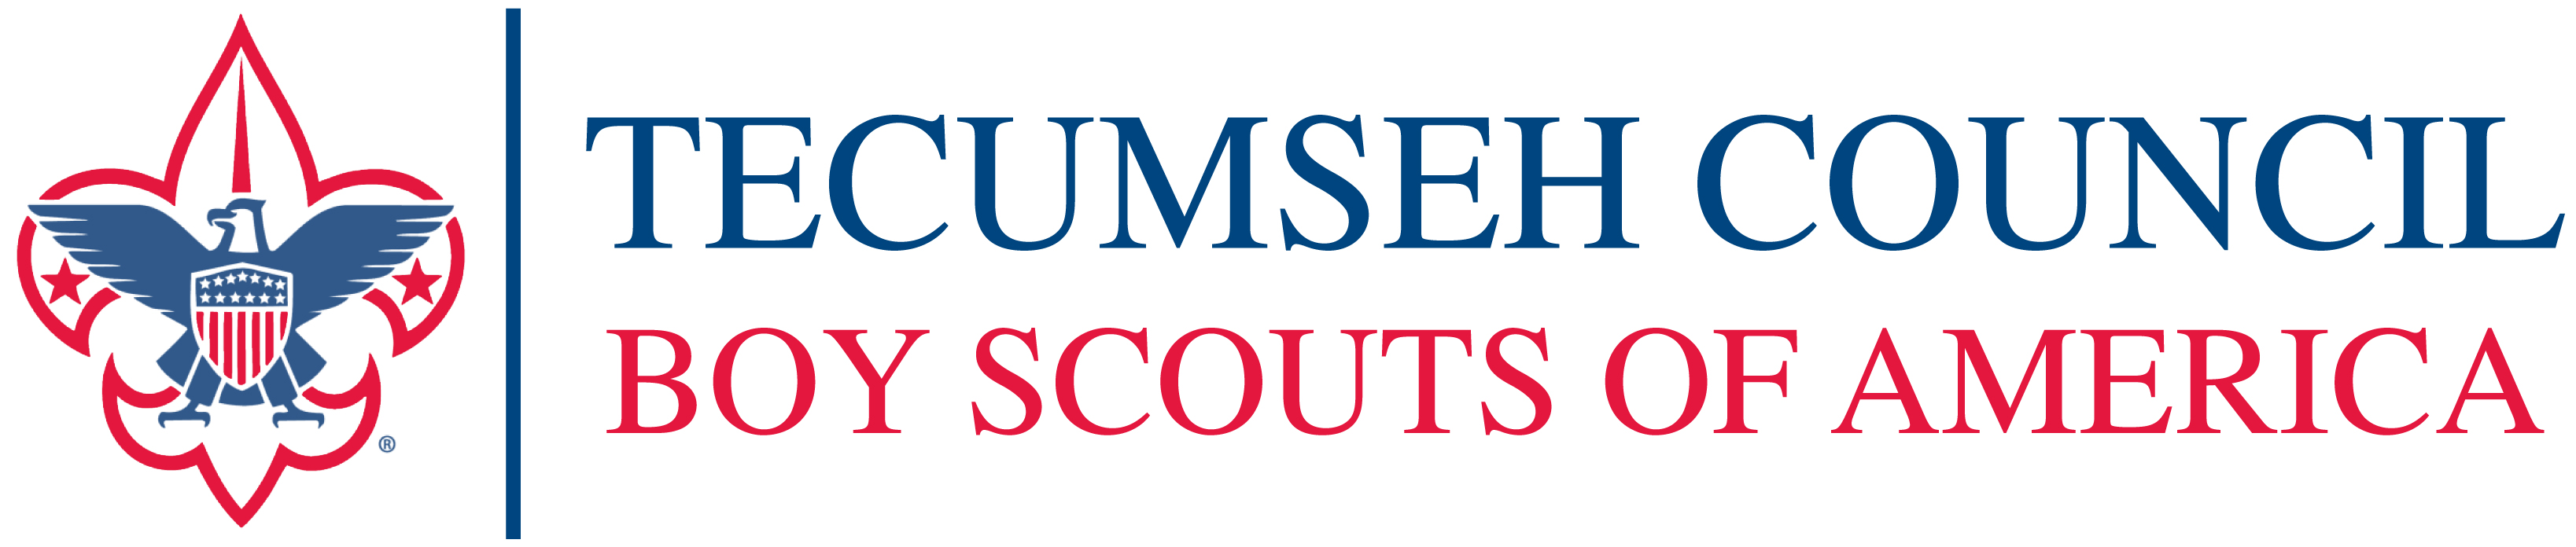 Boy Scouts Of America, Tecumseh Council logo